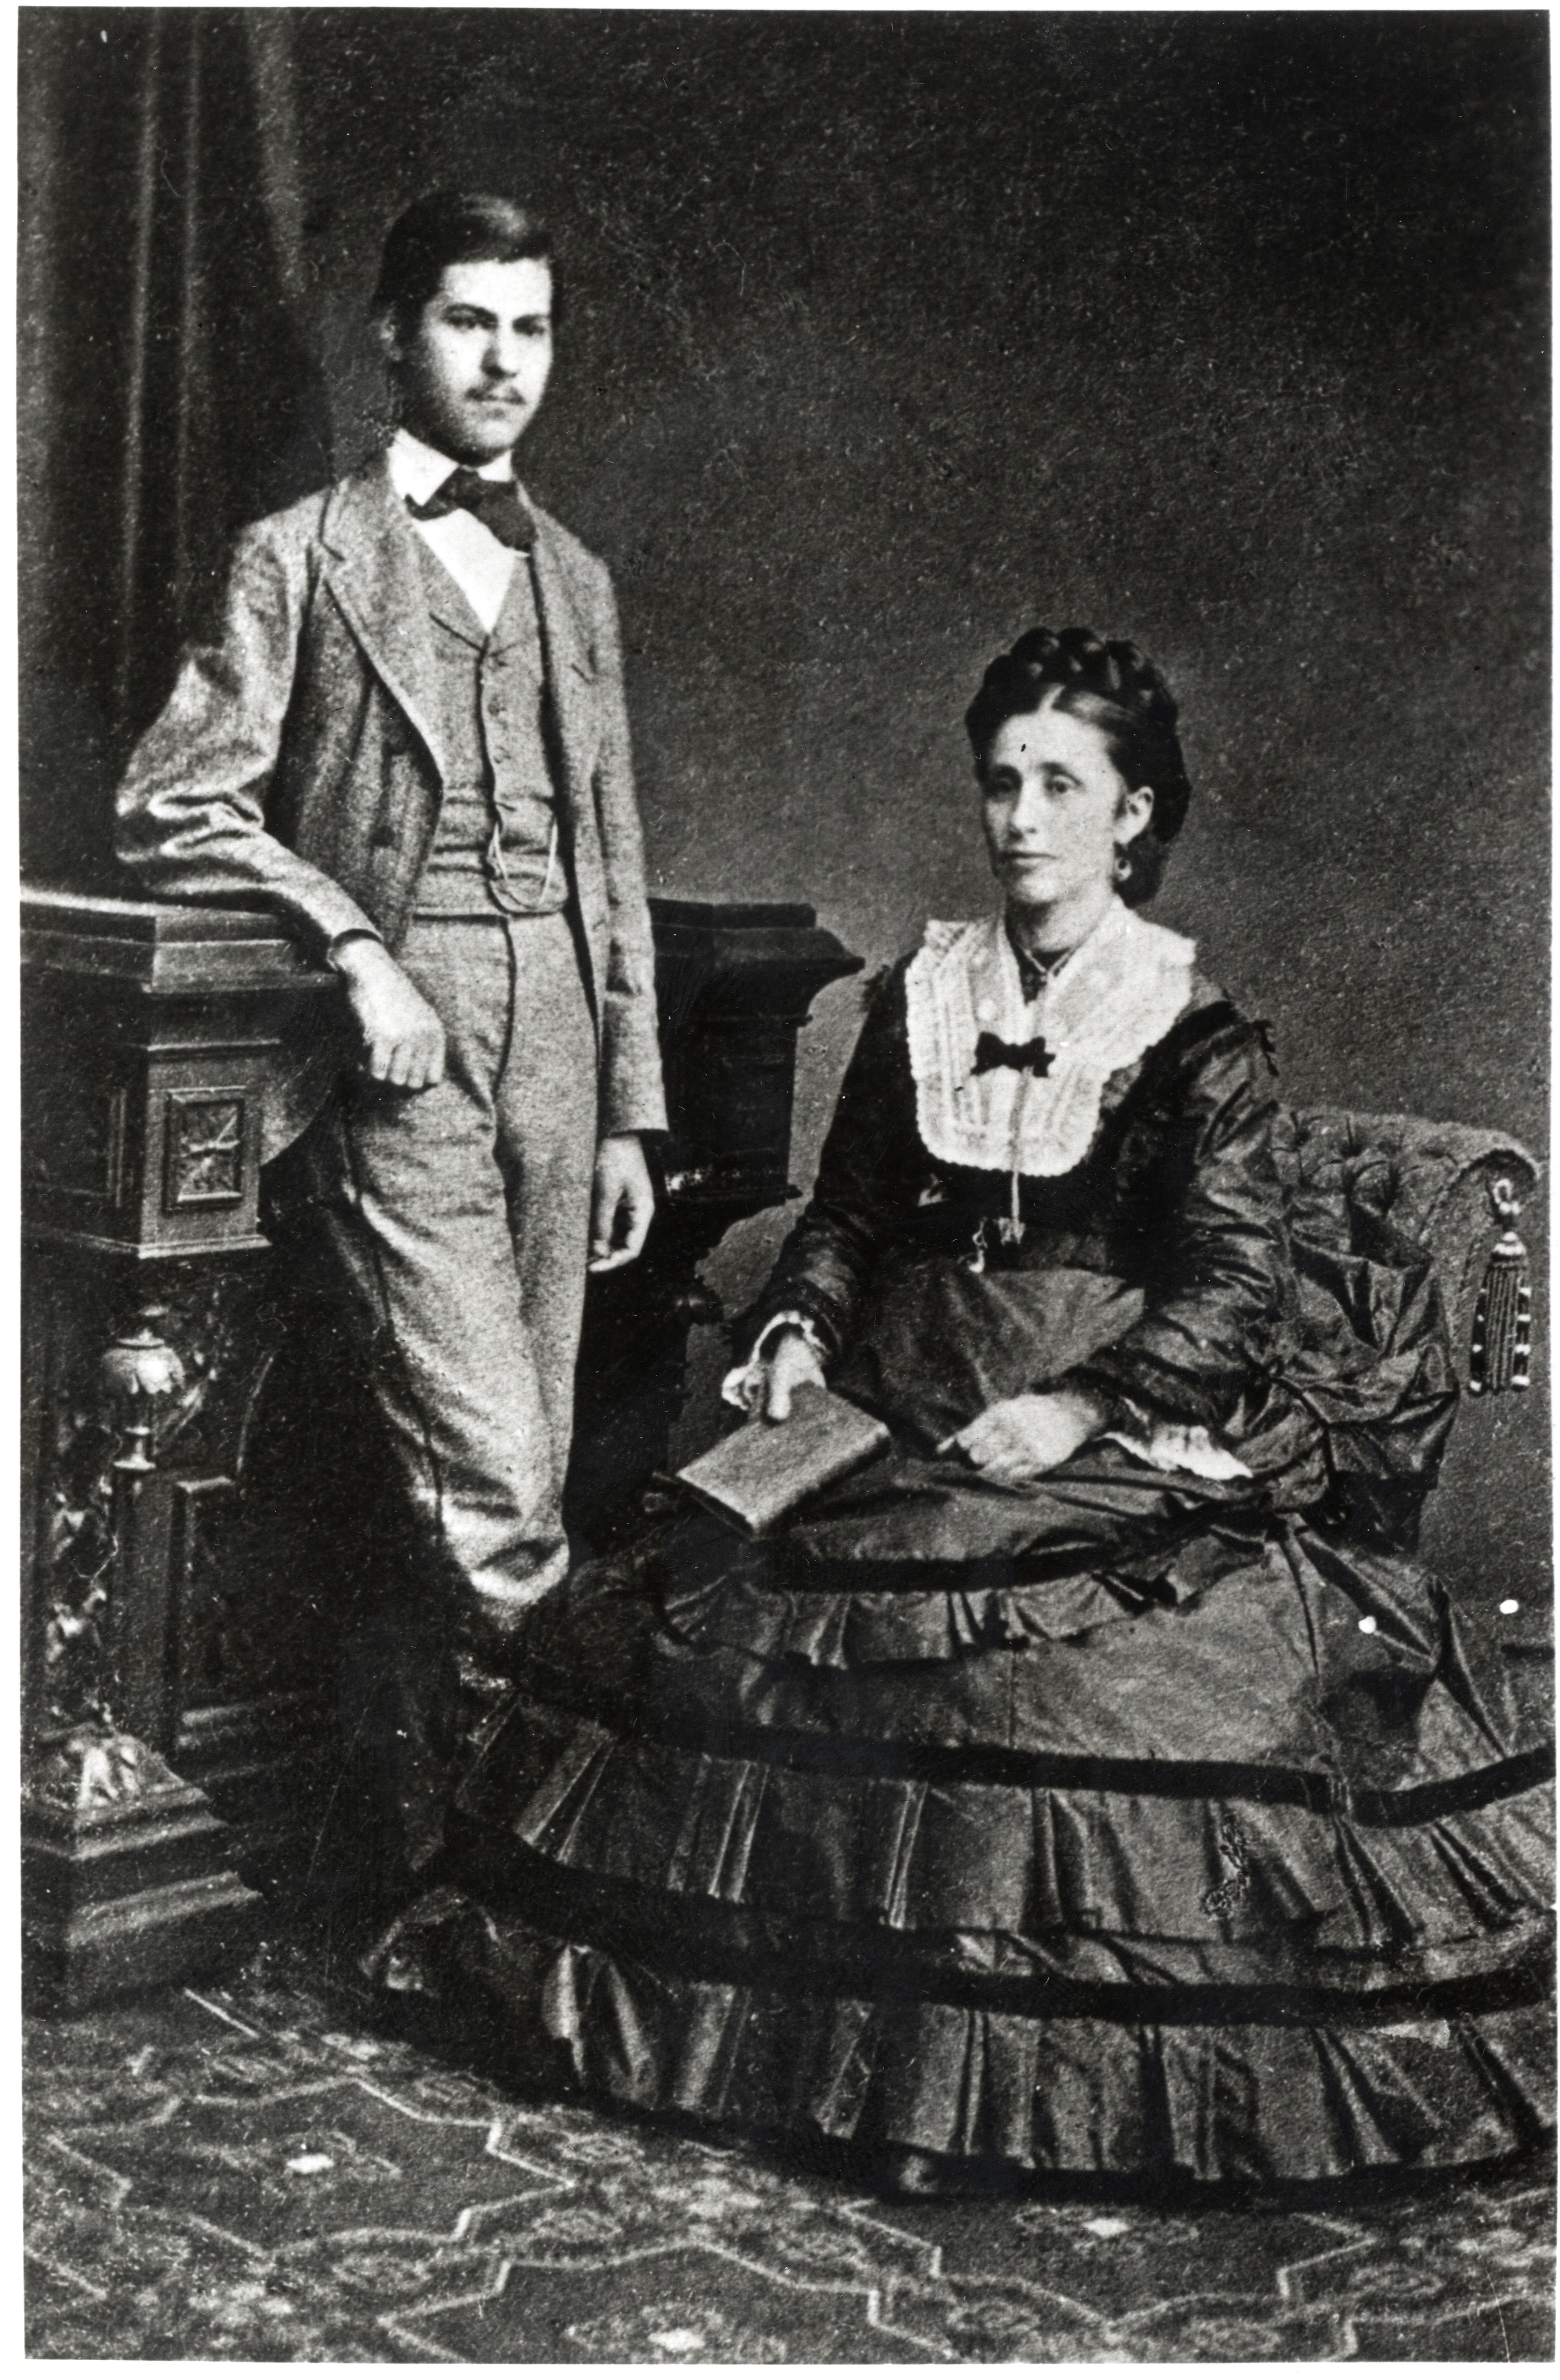 Sigmund Freud all’età di 16 anni con sua madre Amalia Freud